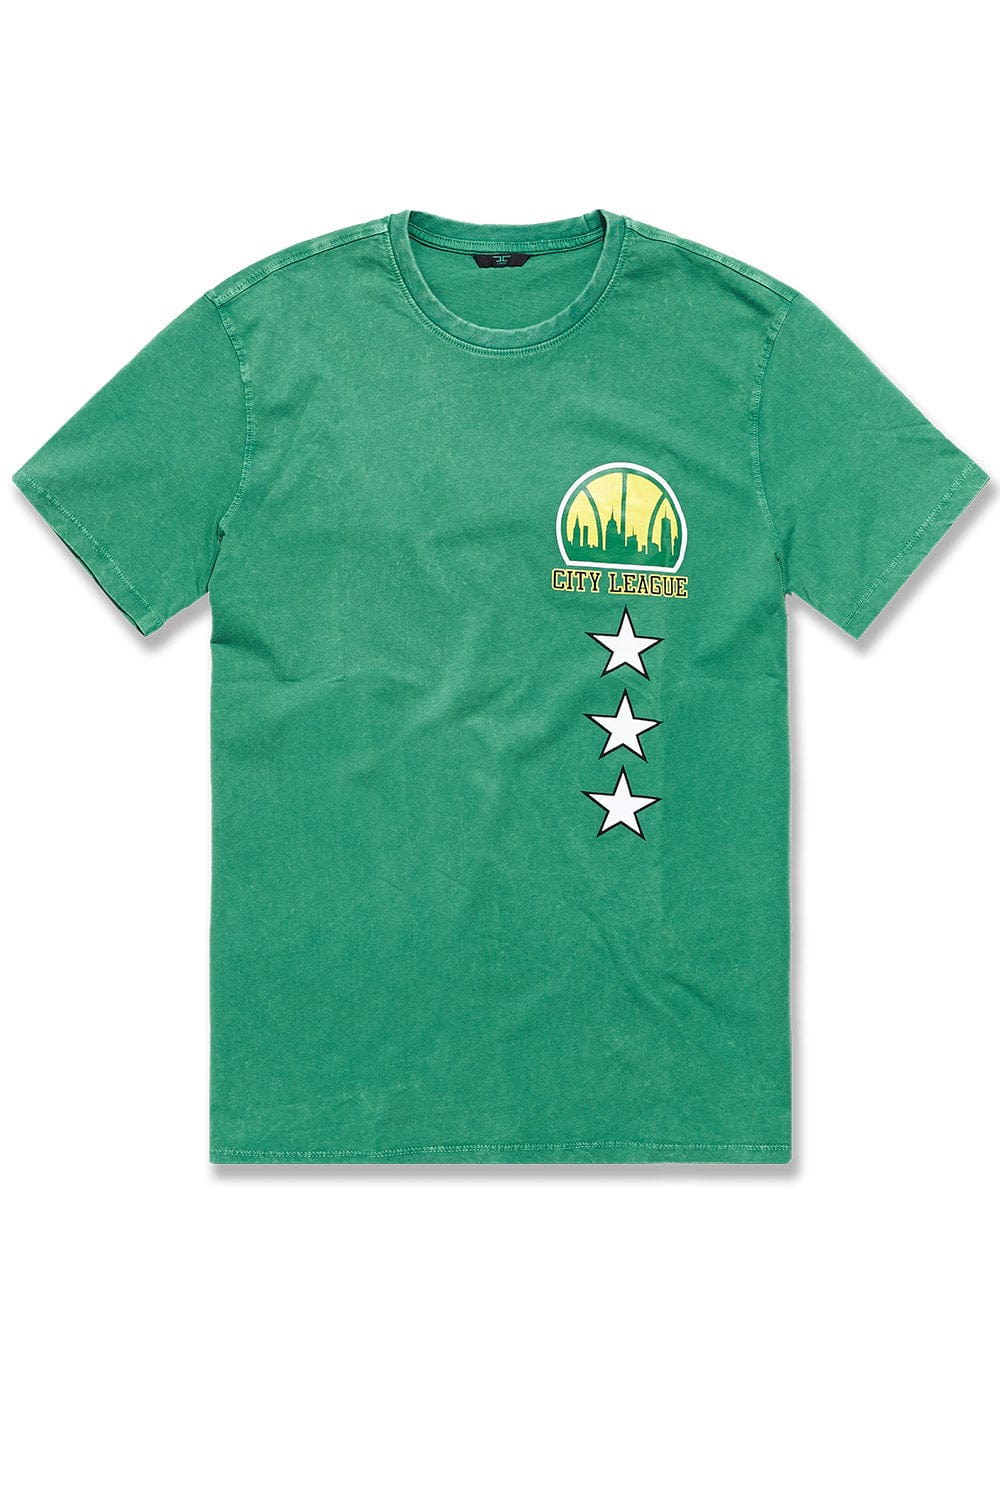 Jordan Craig Emerald City T-Shirt (League Green) S / League Green